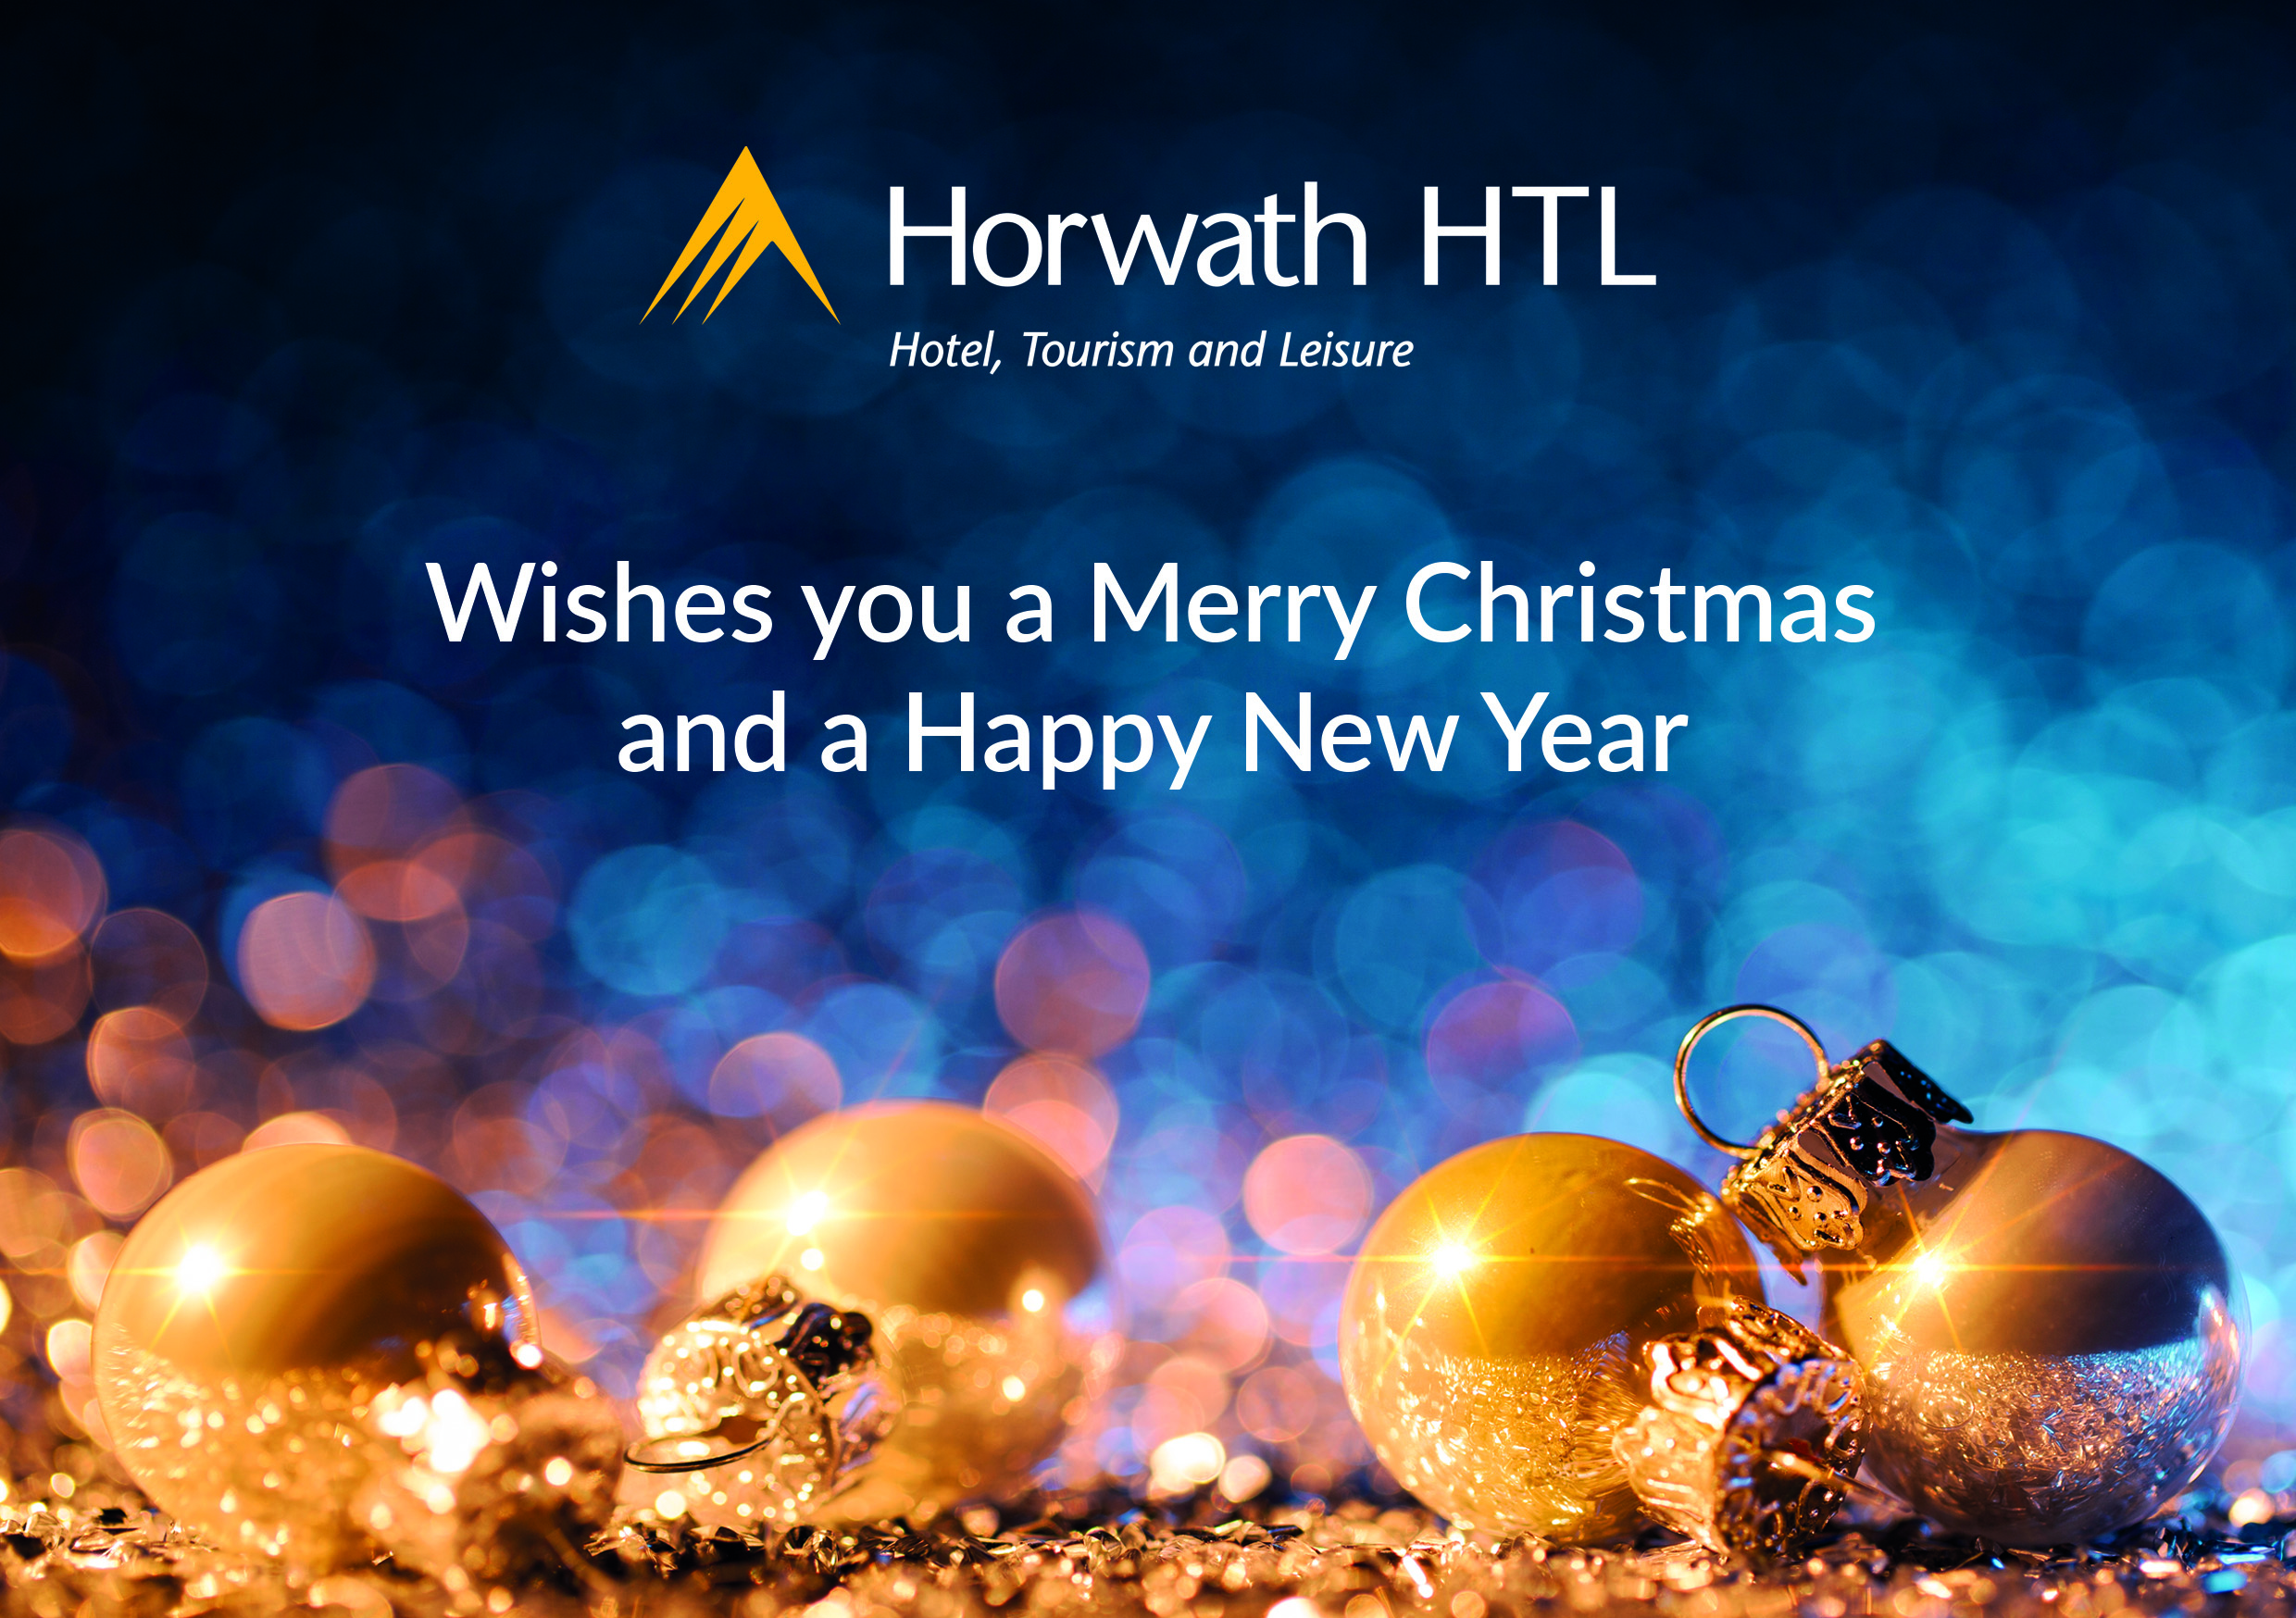 Season’s Greetings from the Horwath HTL team